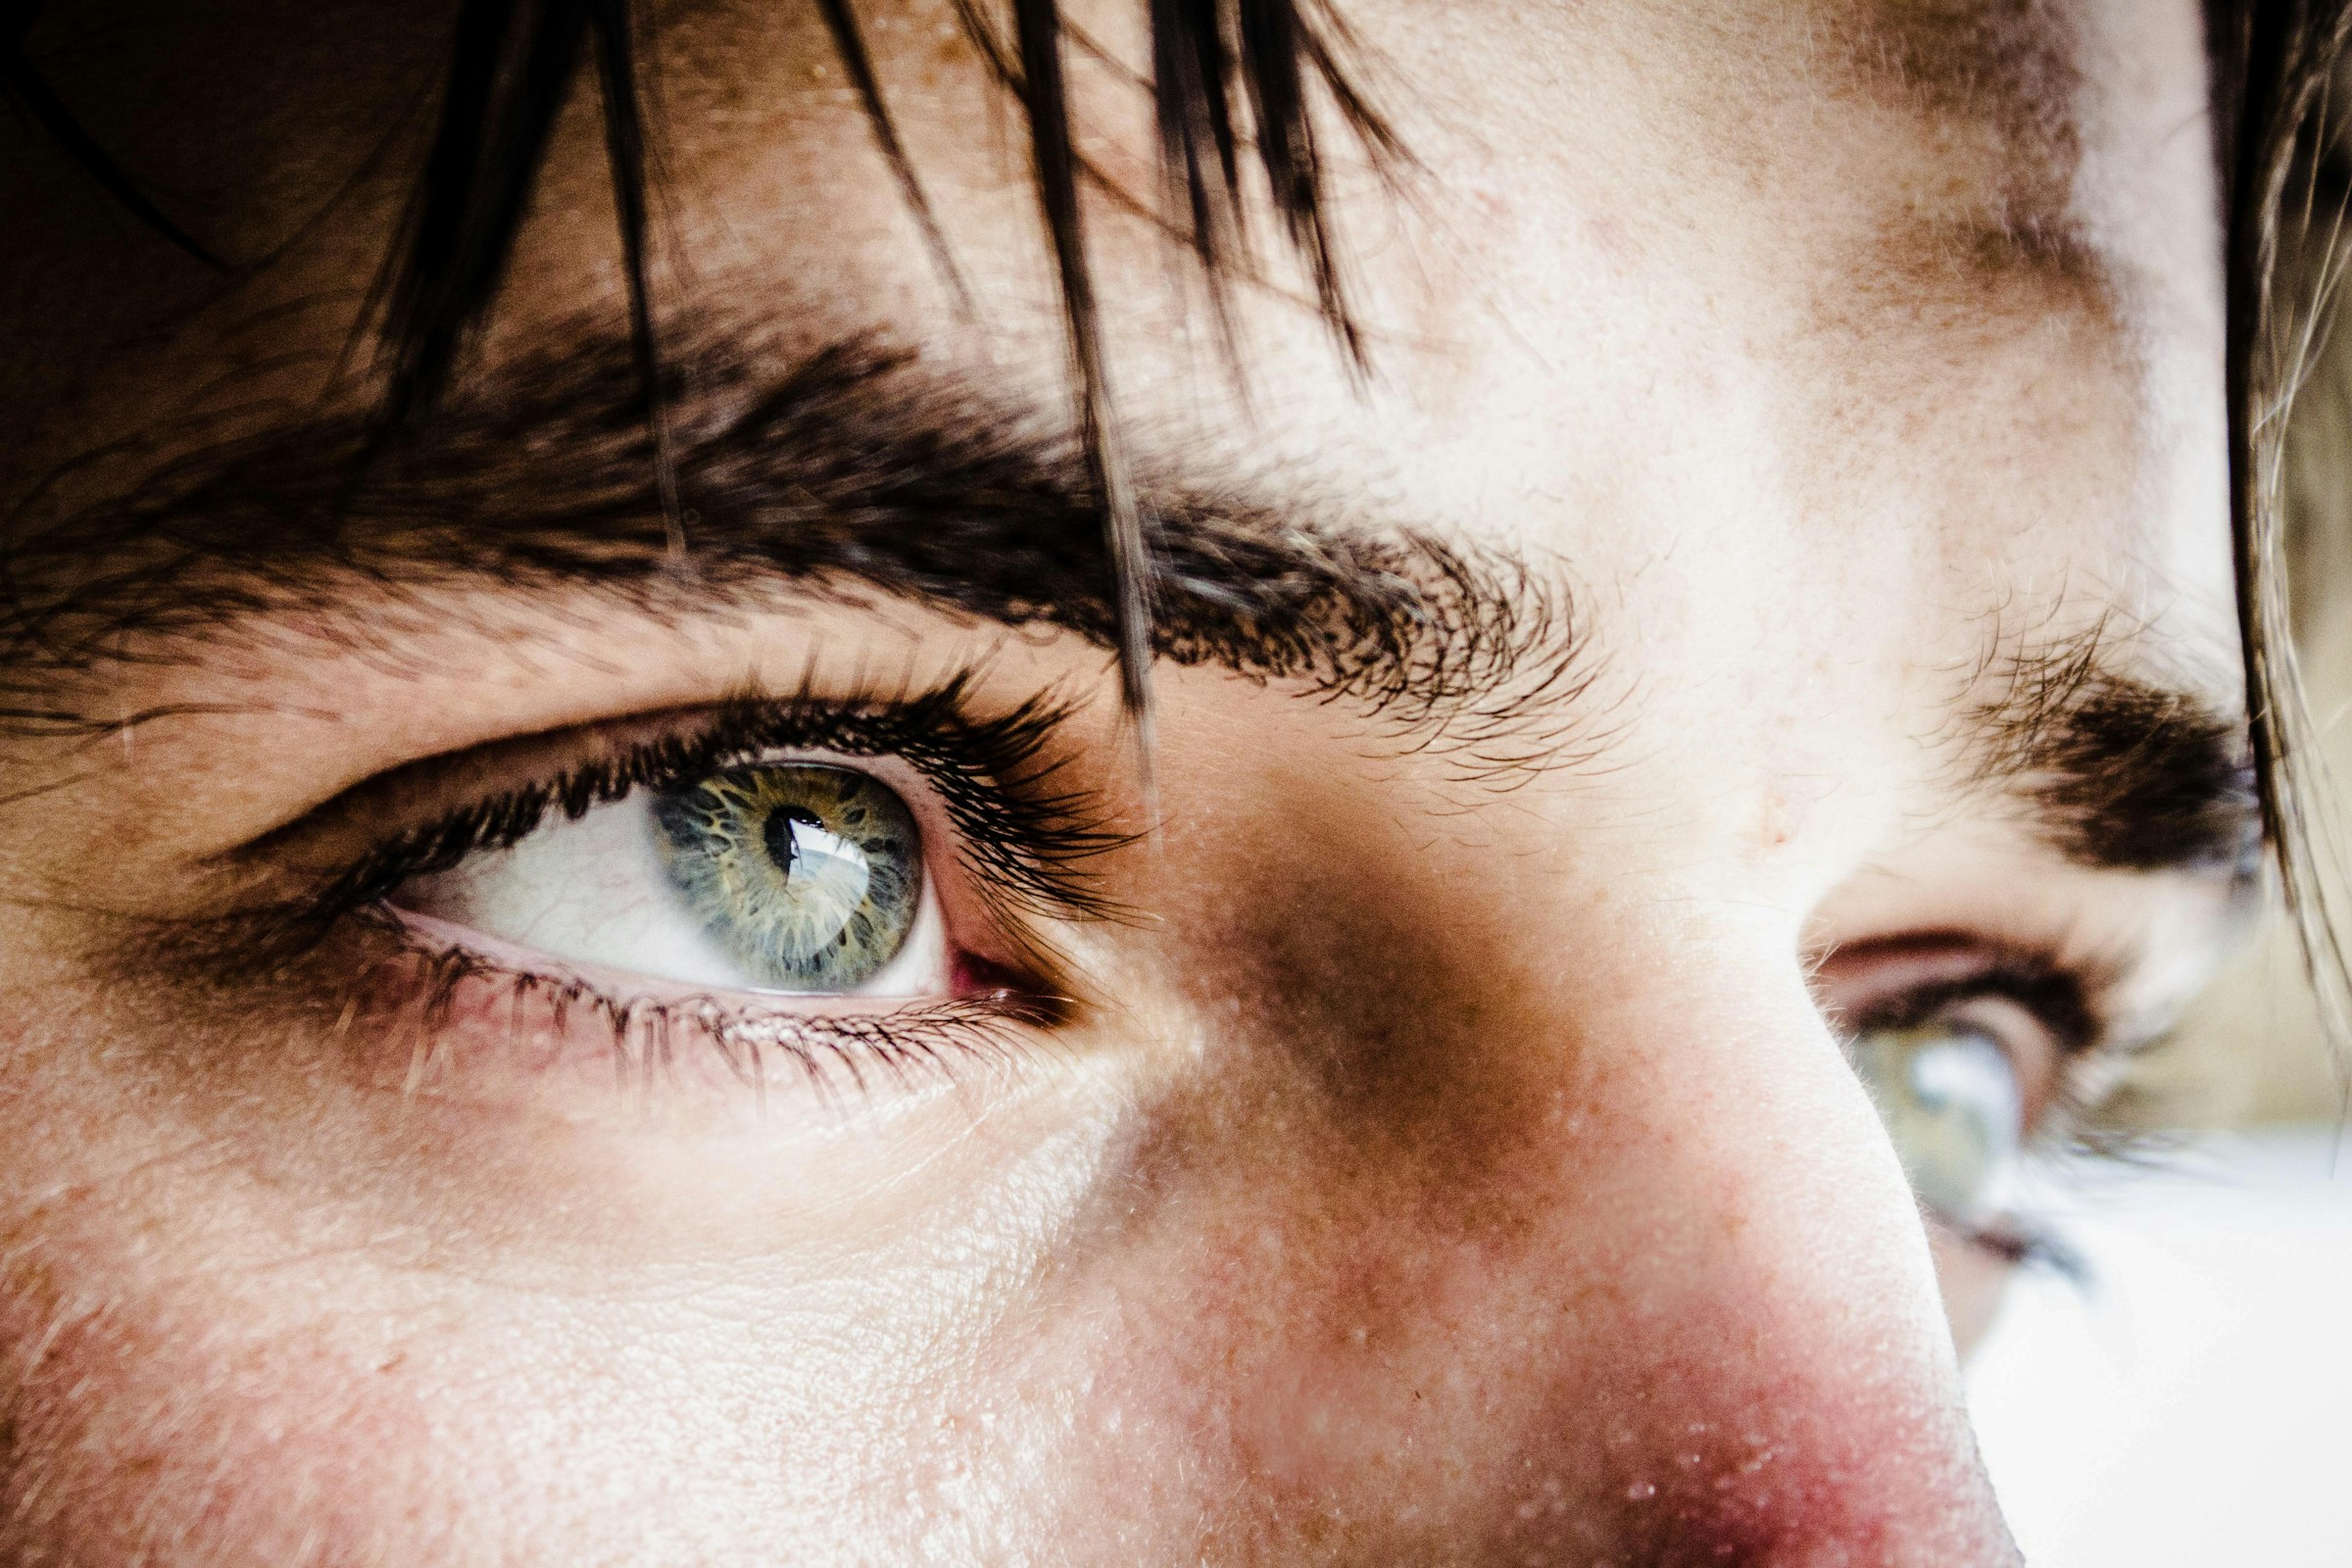 Before leaving, Jamie looks Shailene in the eye for a fleeting moment | Source: Unsplash